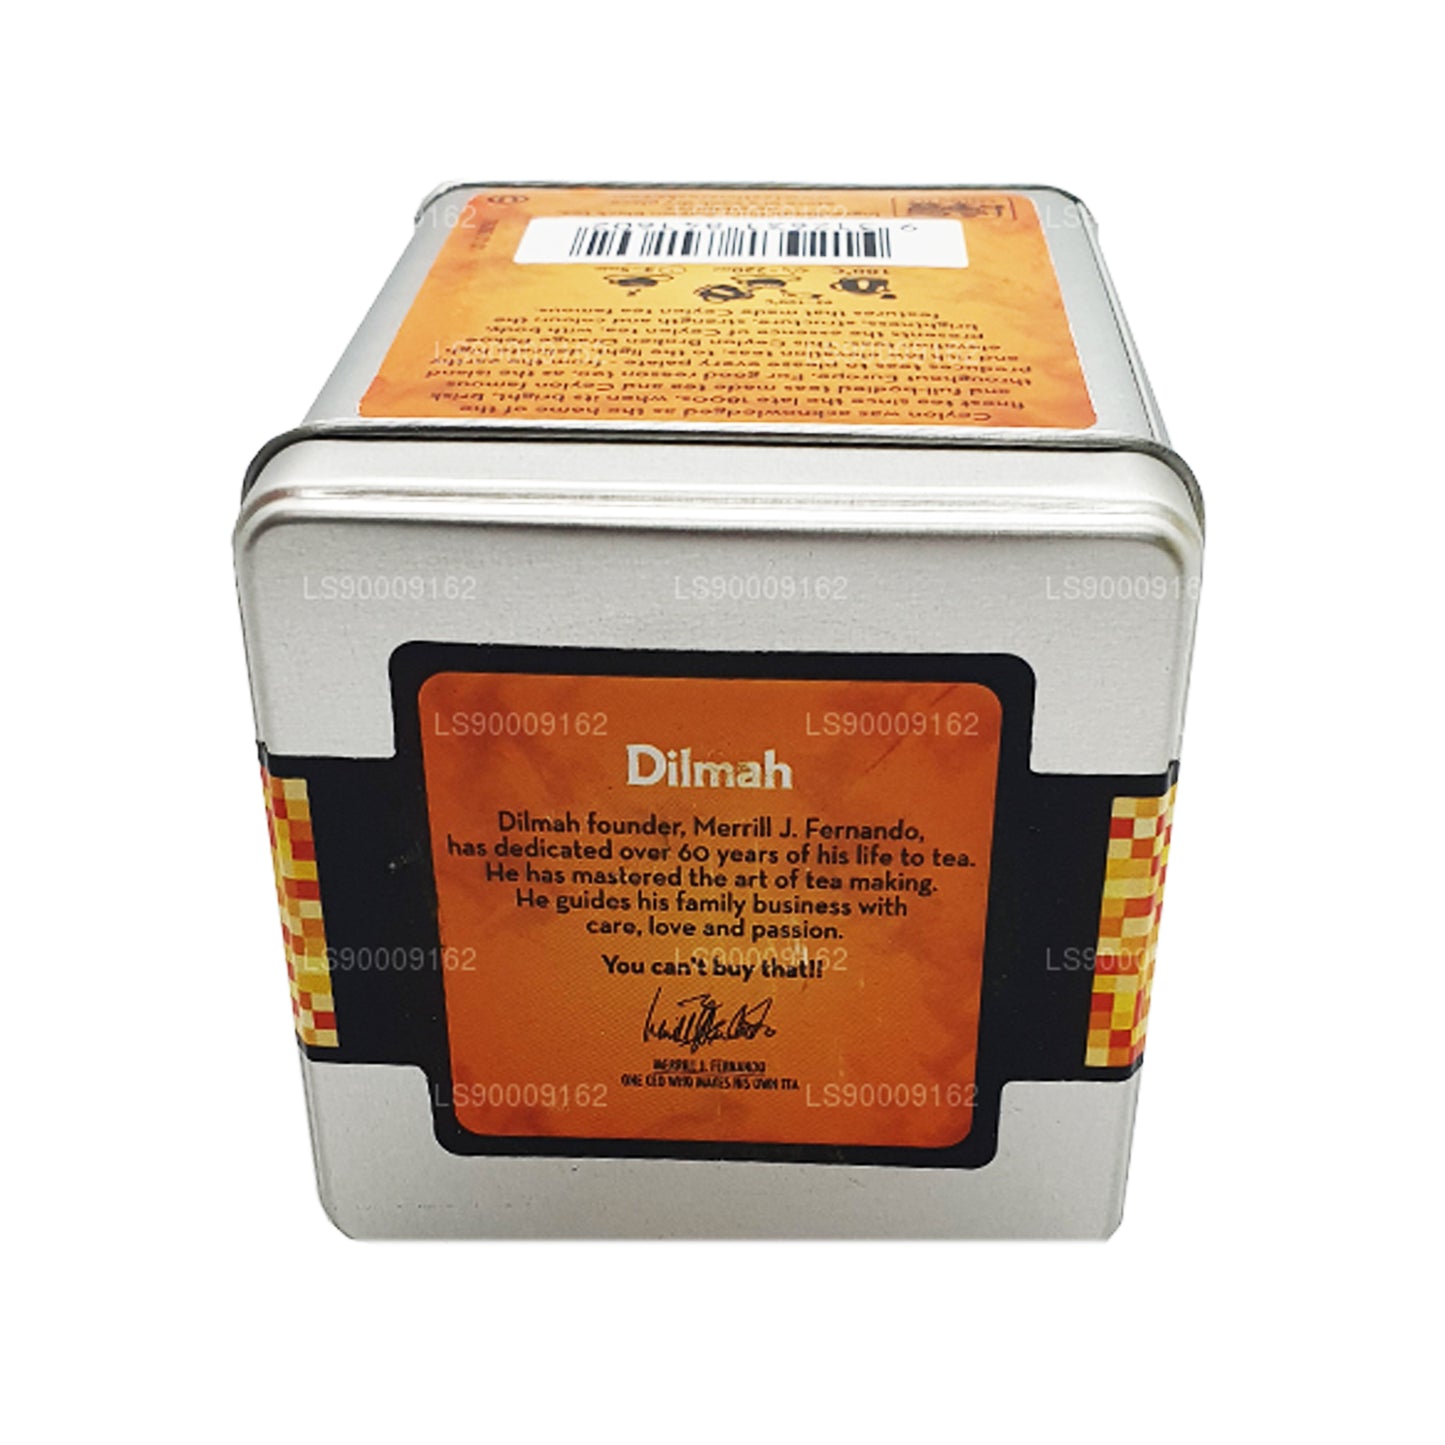 Dilmah T 系列锡兰 Supreme (40g) 20 个茶包